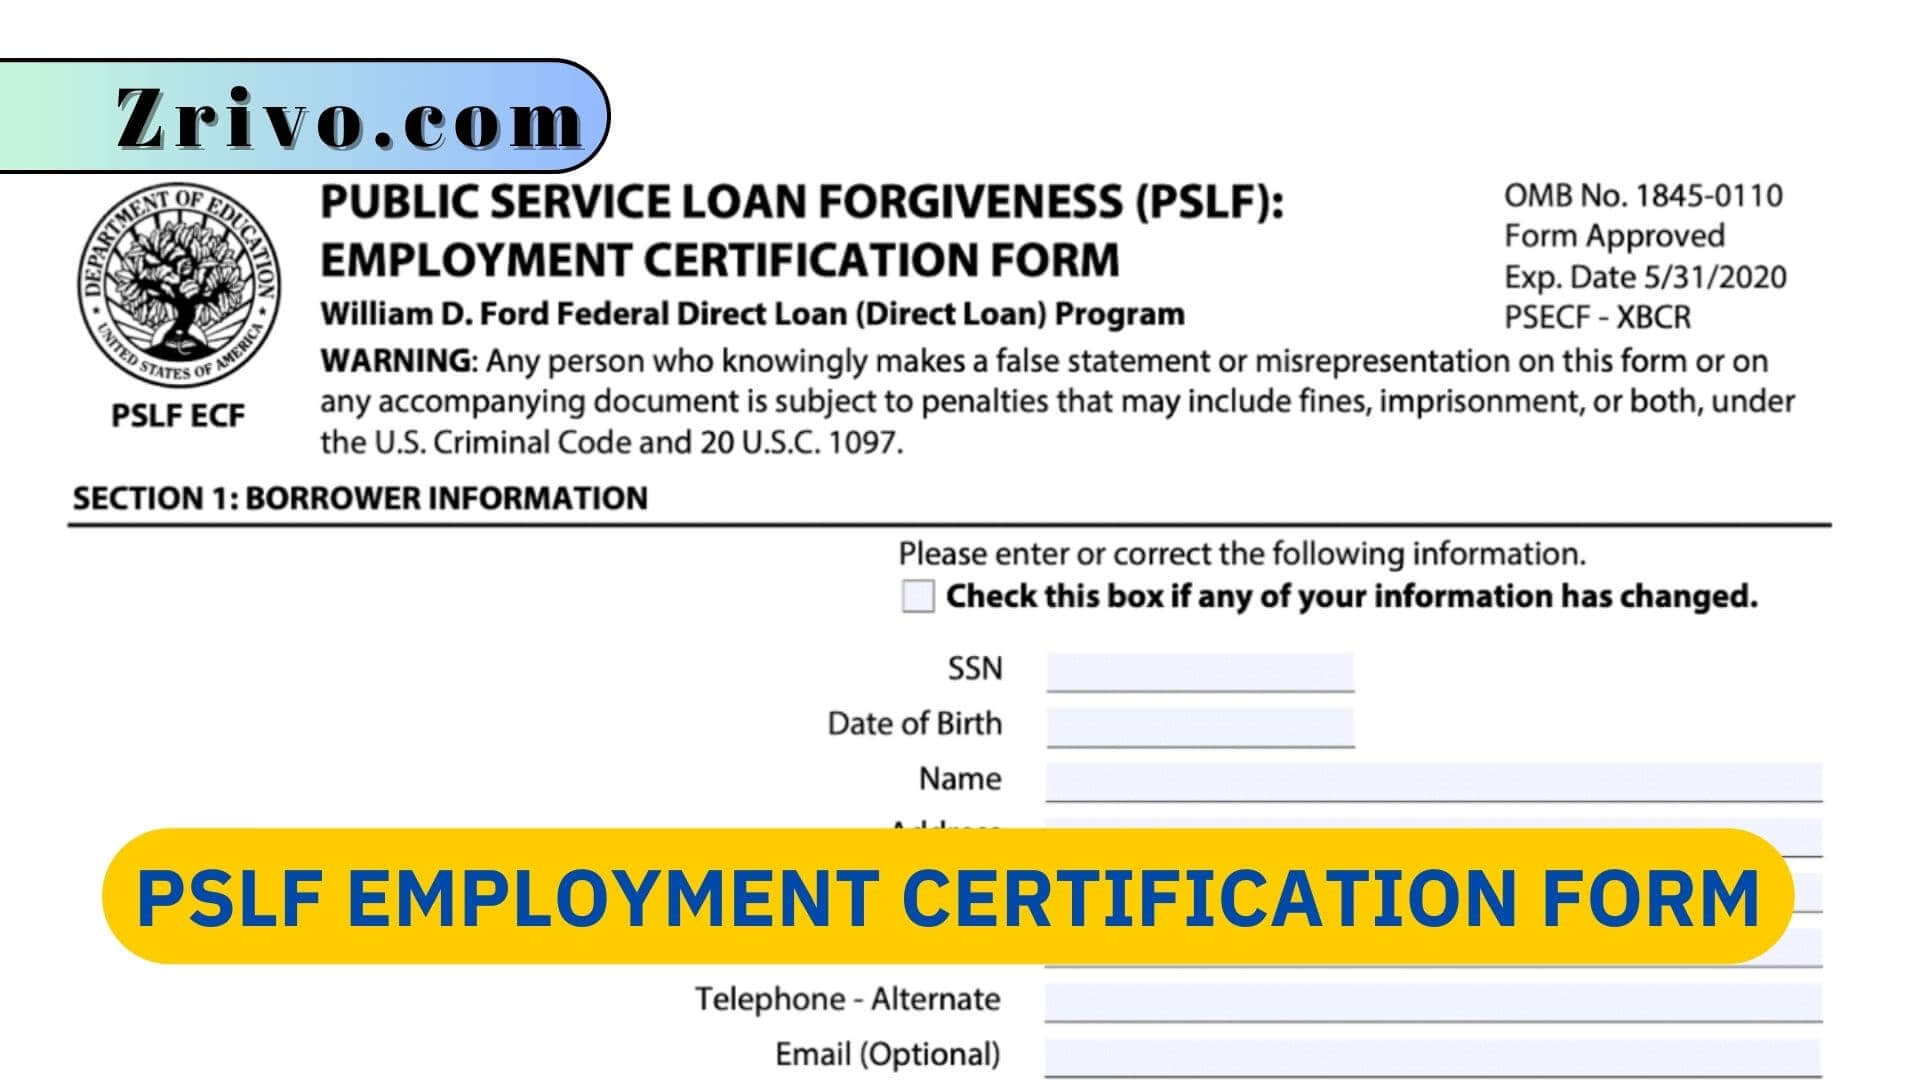 PSLF Employment Certification Form